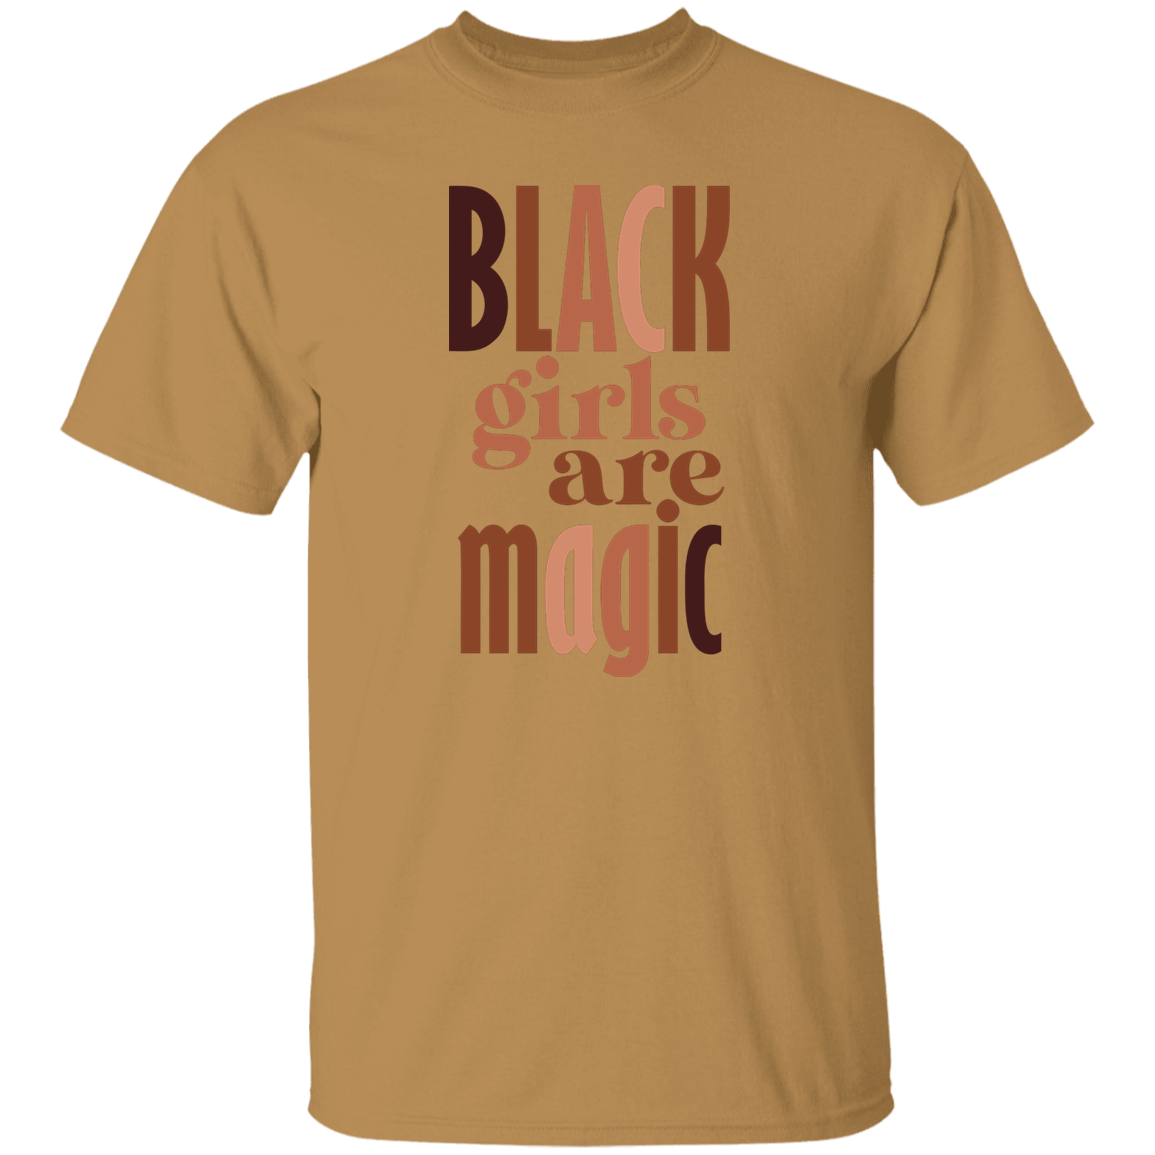 Black girls are magic T-Shirt